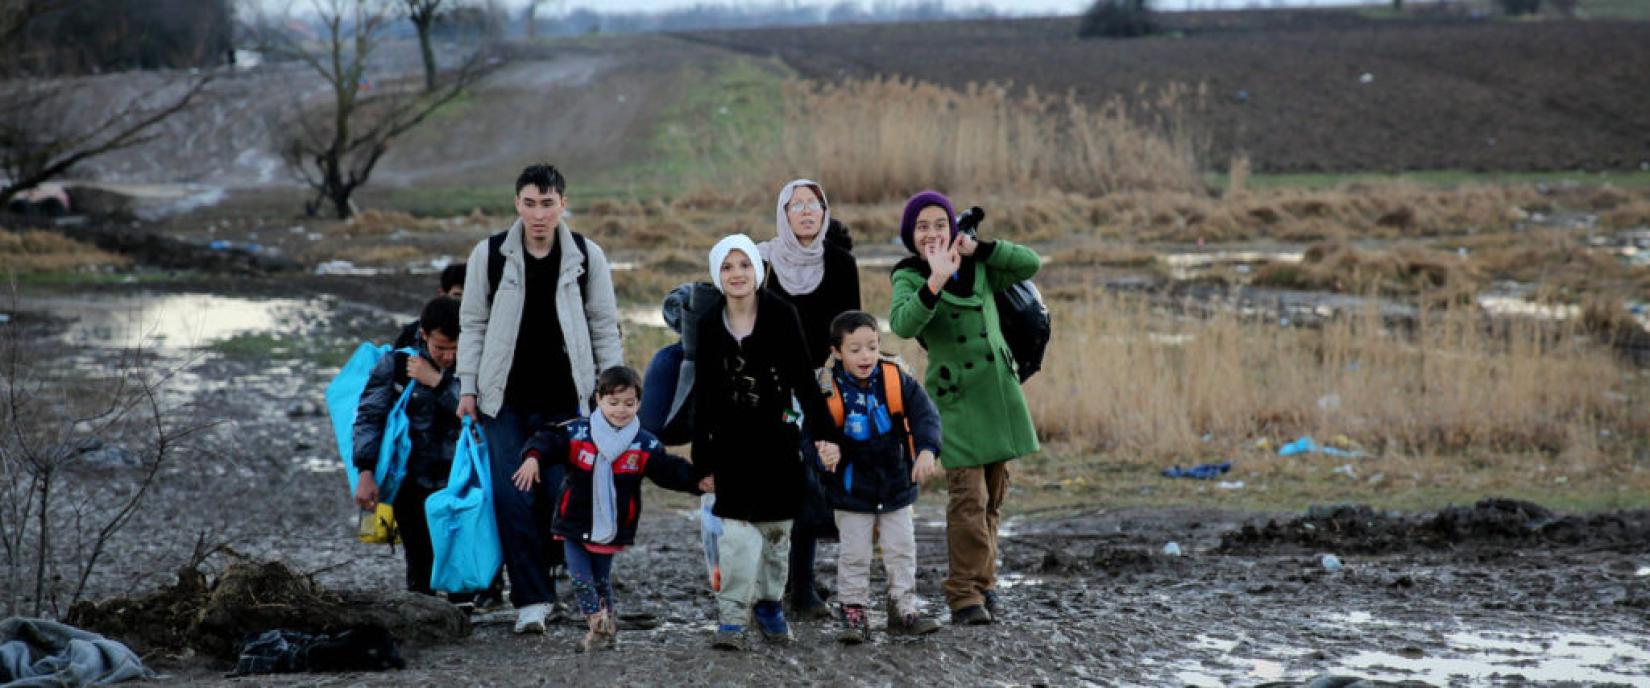 Família de migrantes em Miratovac, Sérvia. Foto: ONU